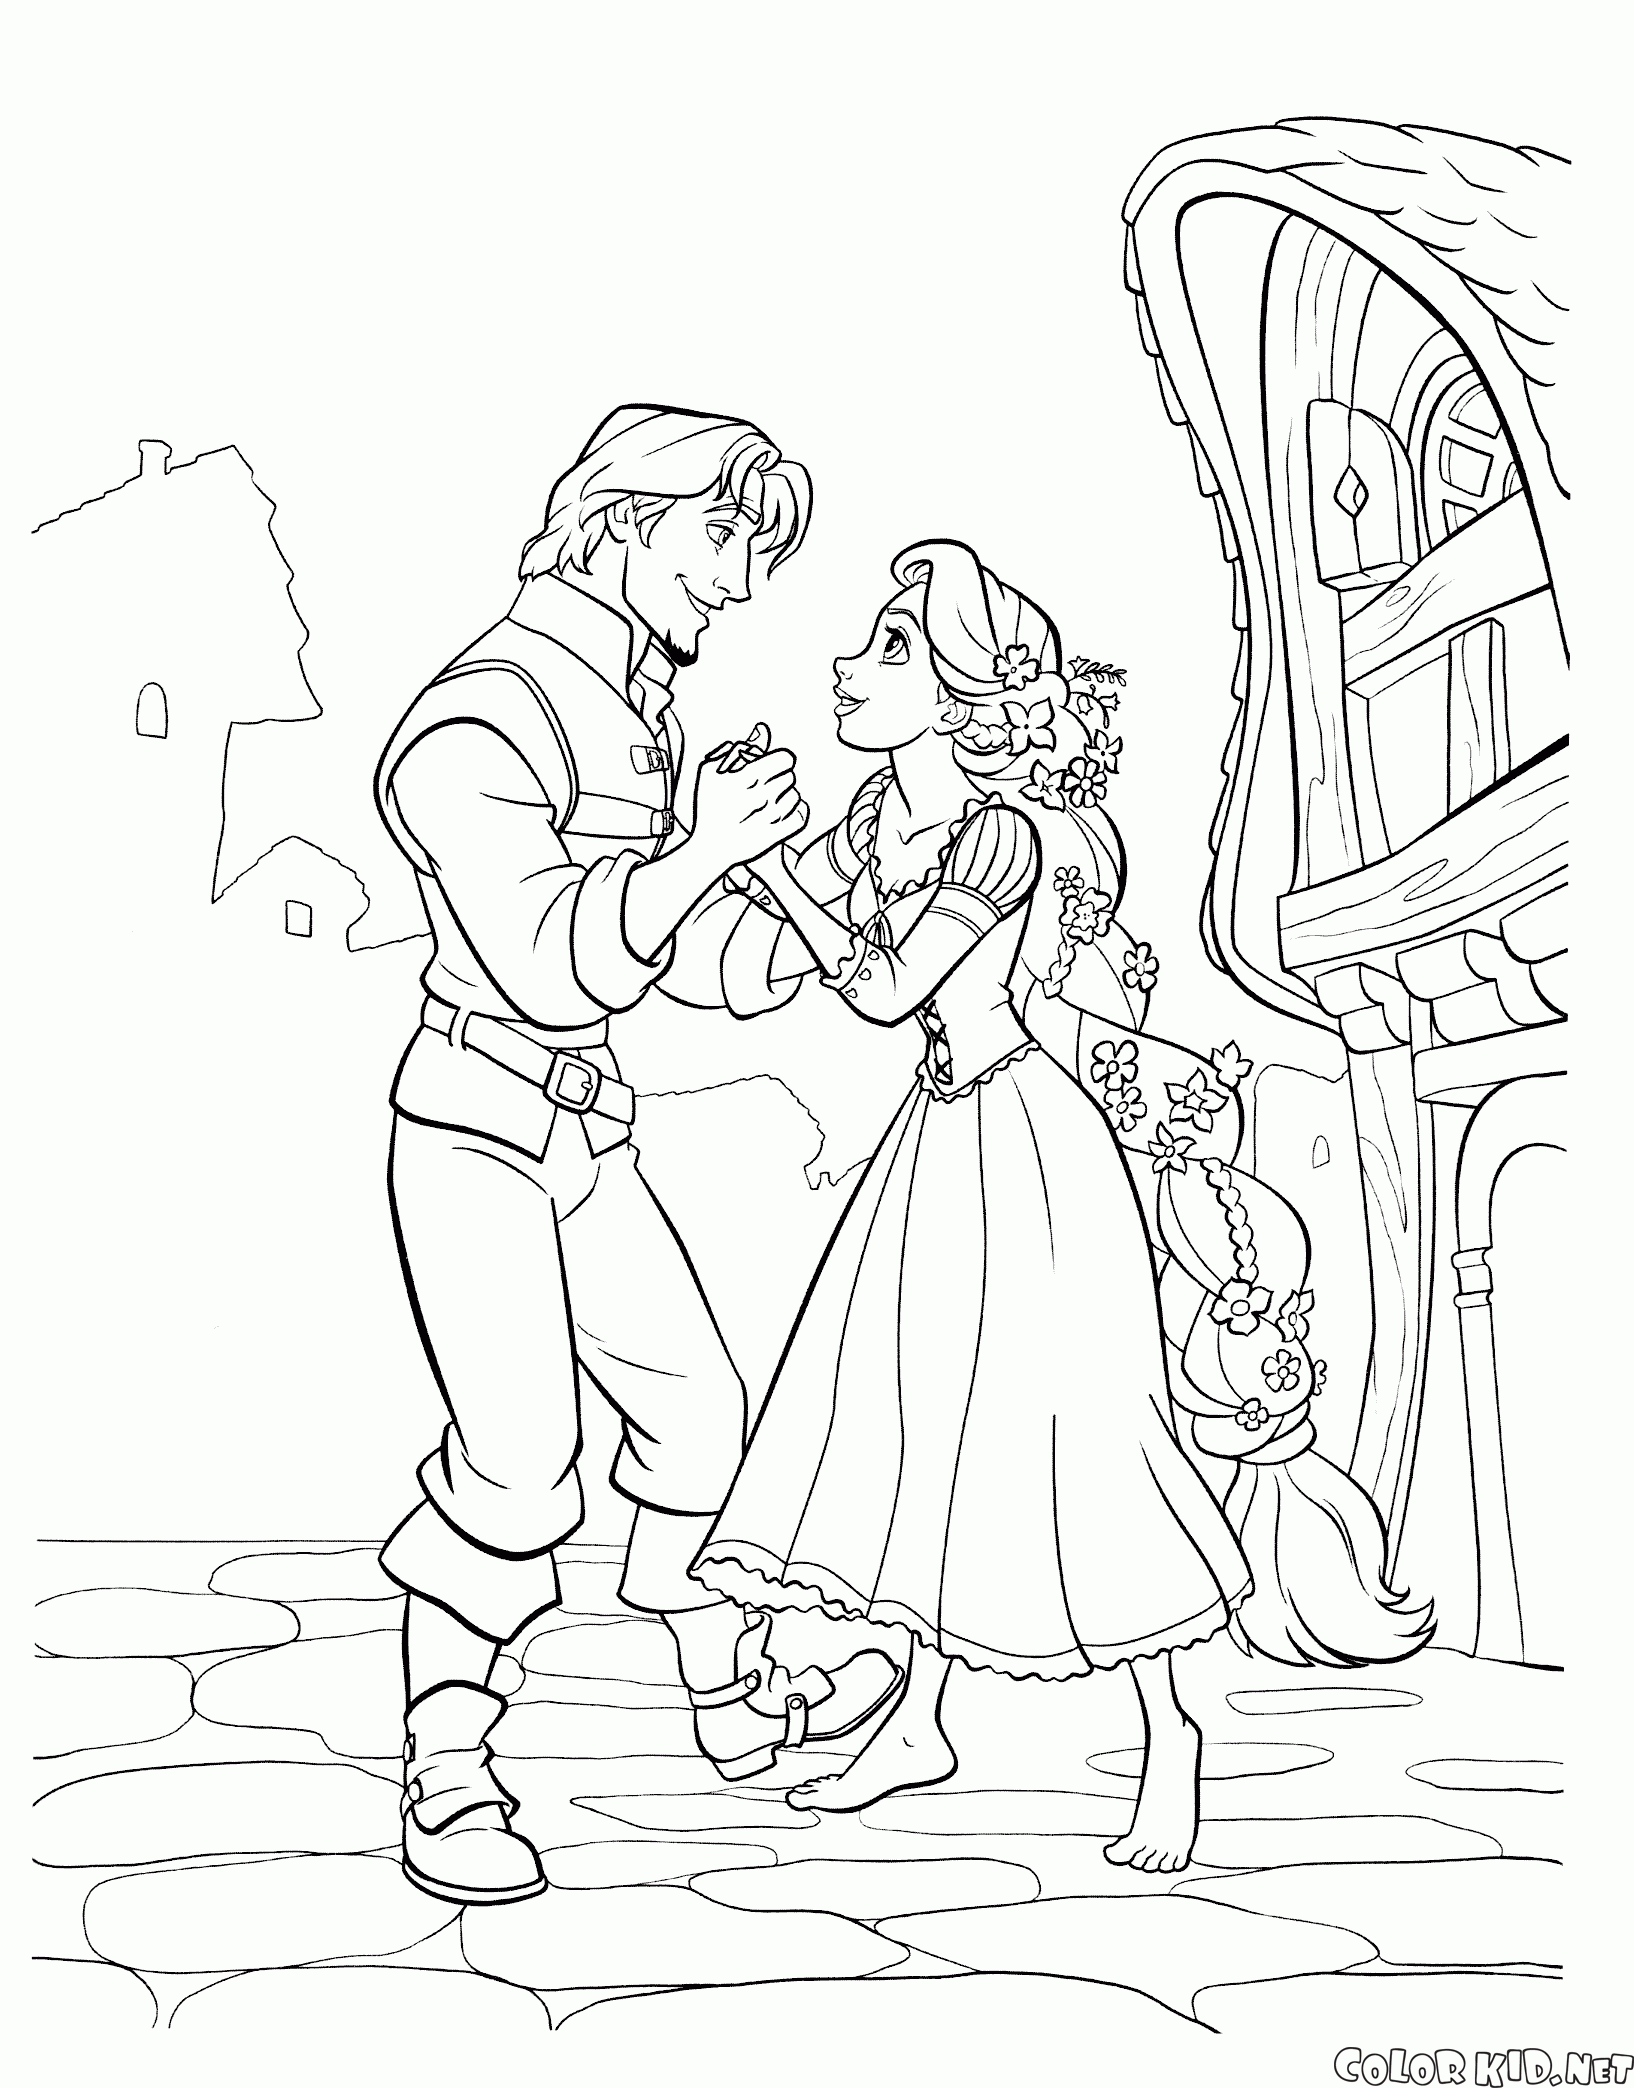 Meeting Flynn and Rapunzel